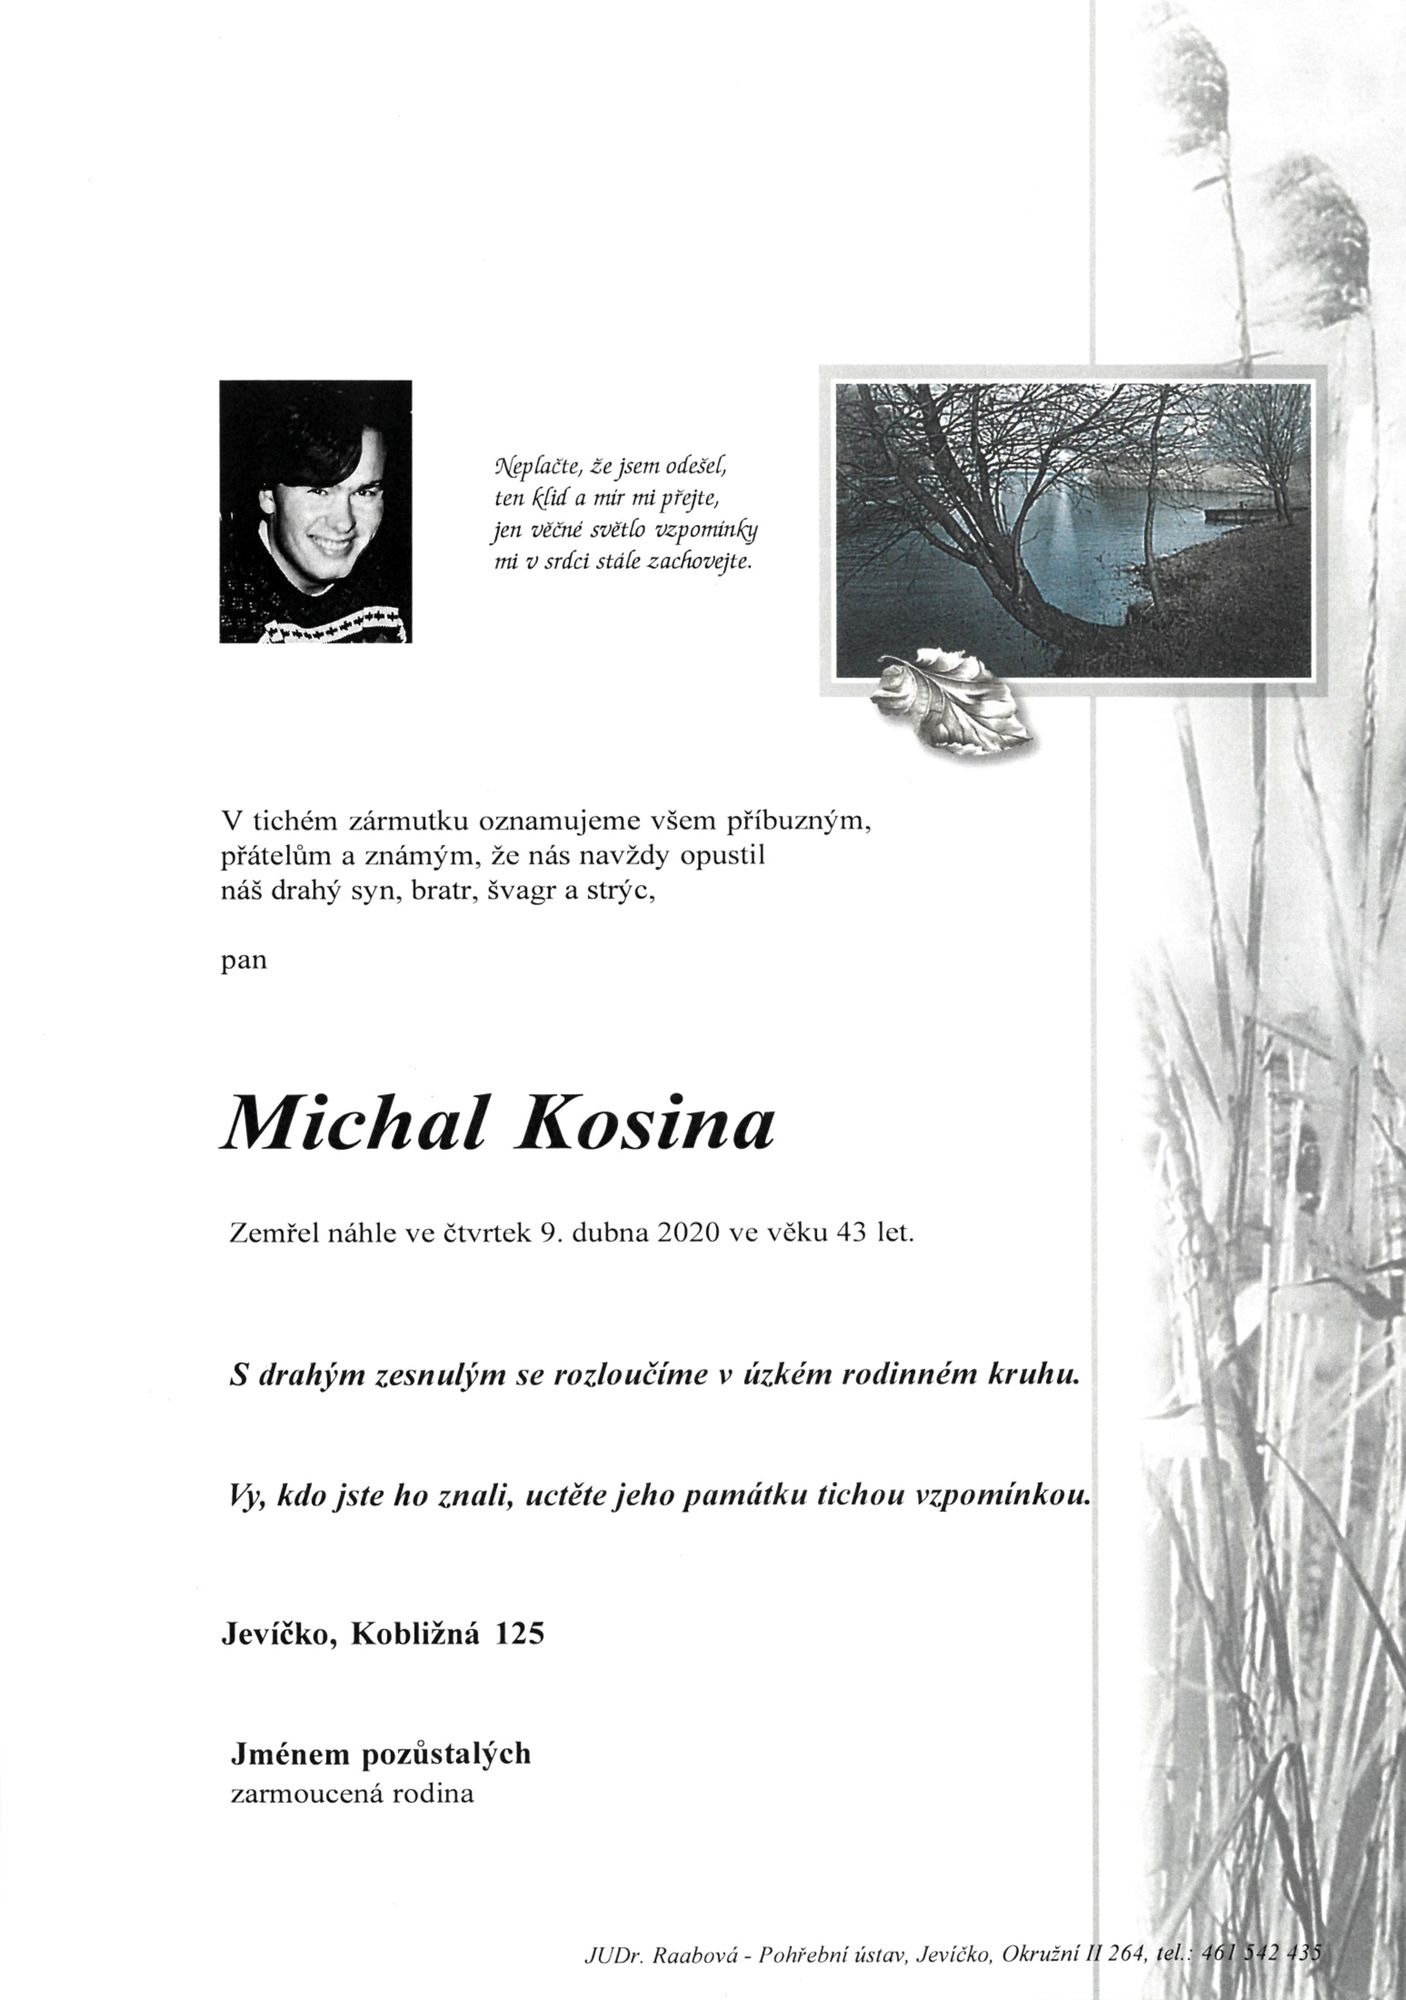 Michal Kosina